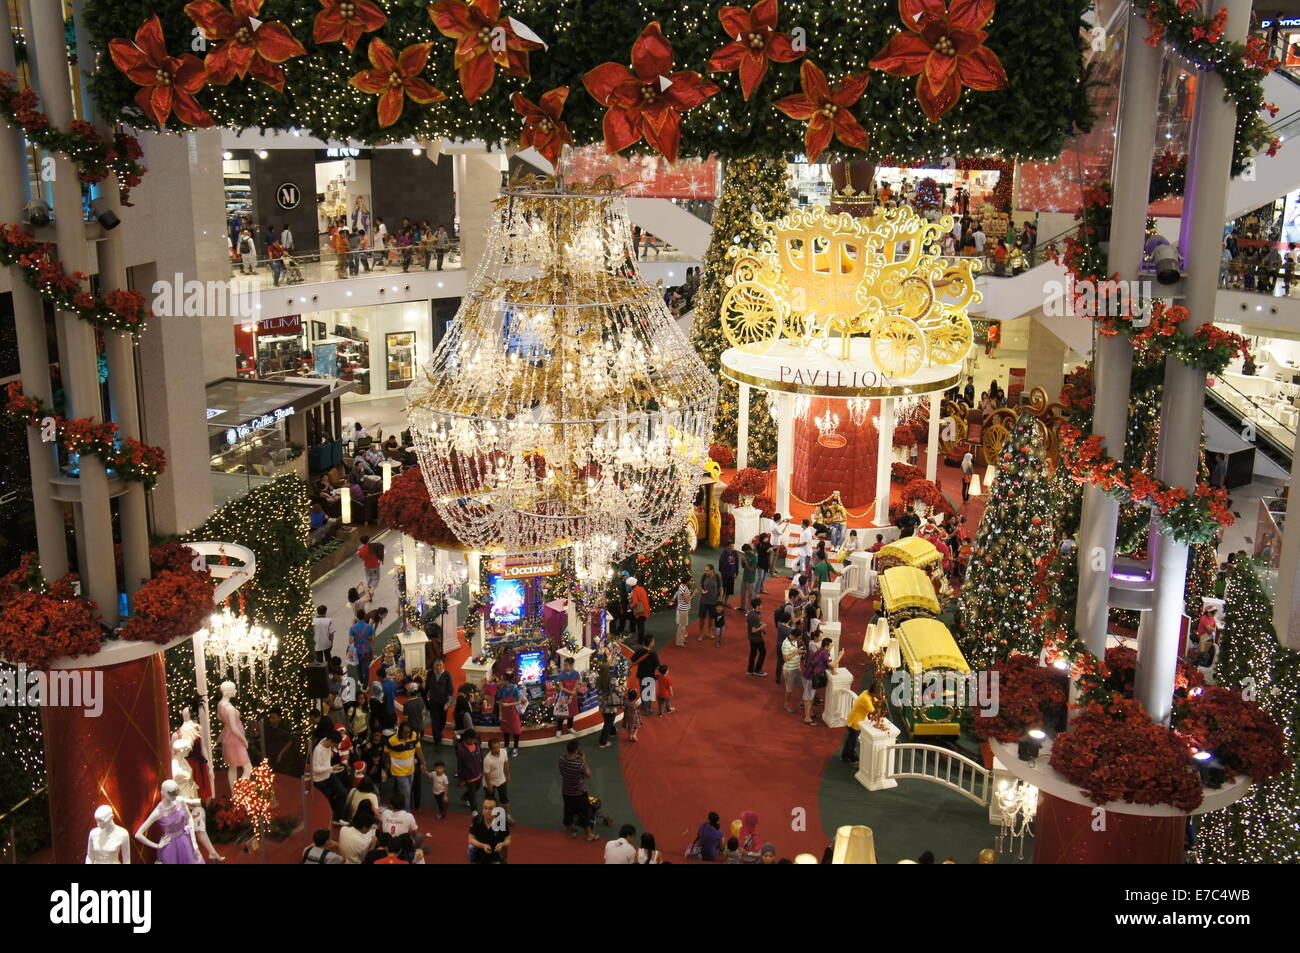  Christmas  decorations  in Pavilion shopping mall Kuala  